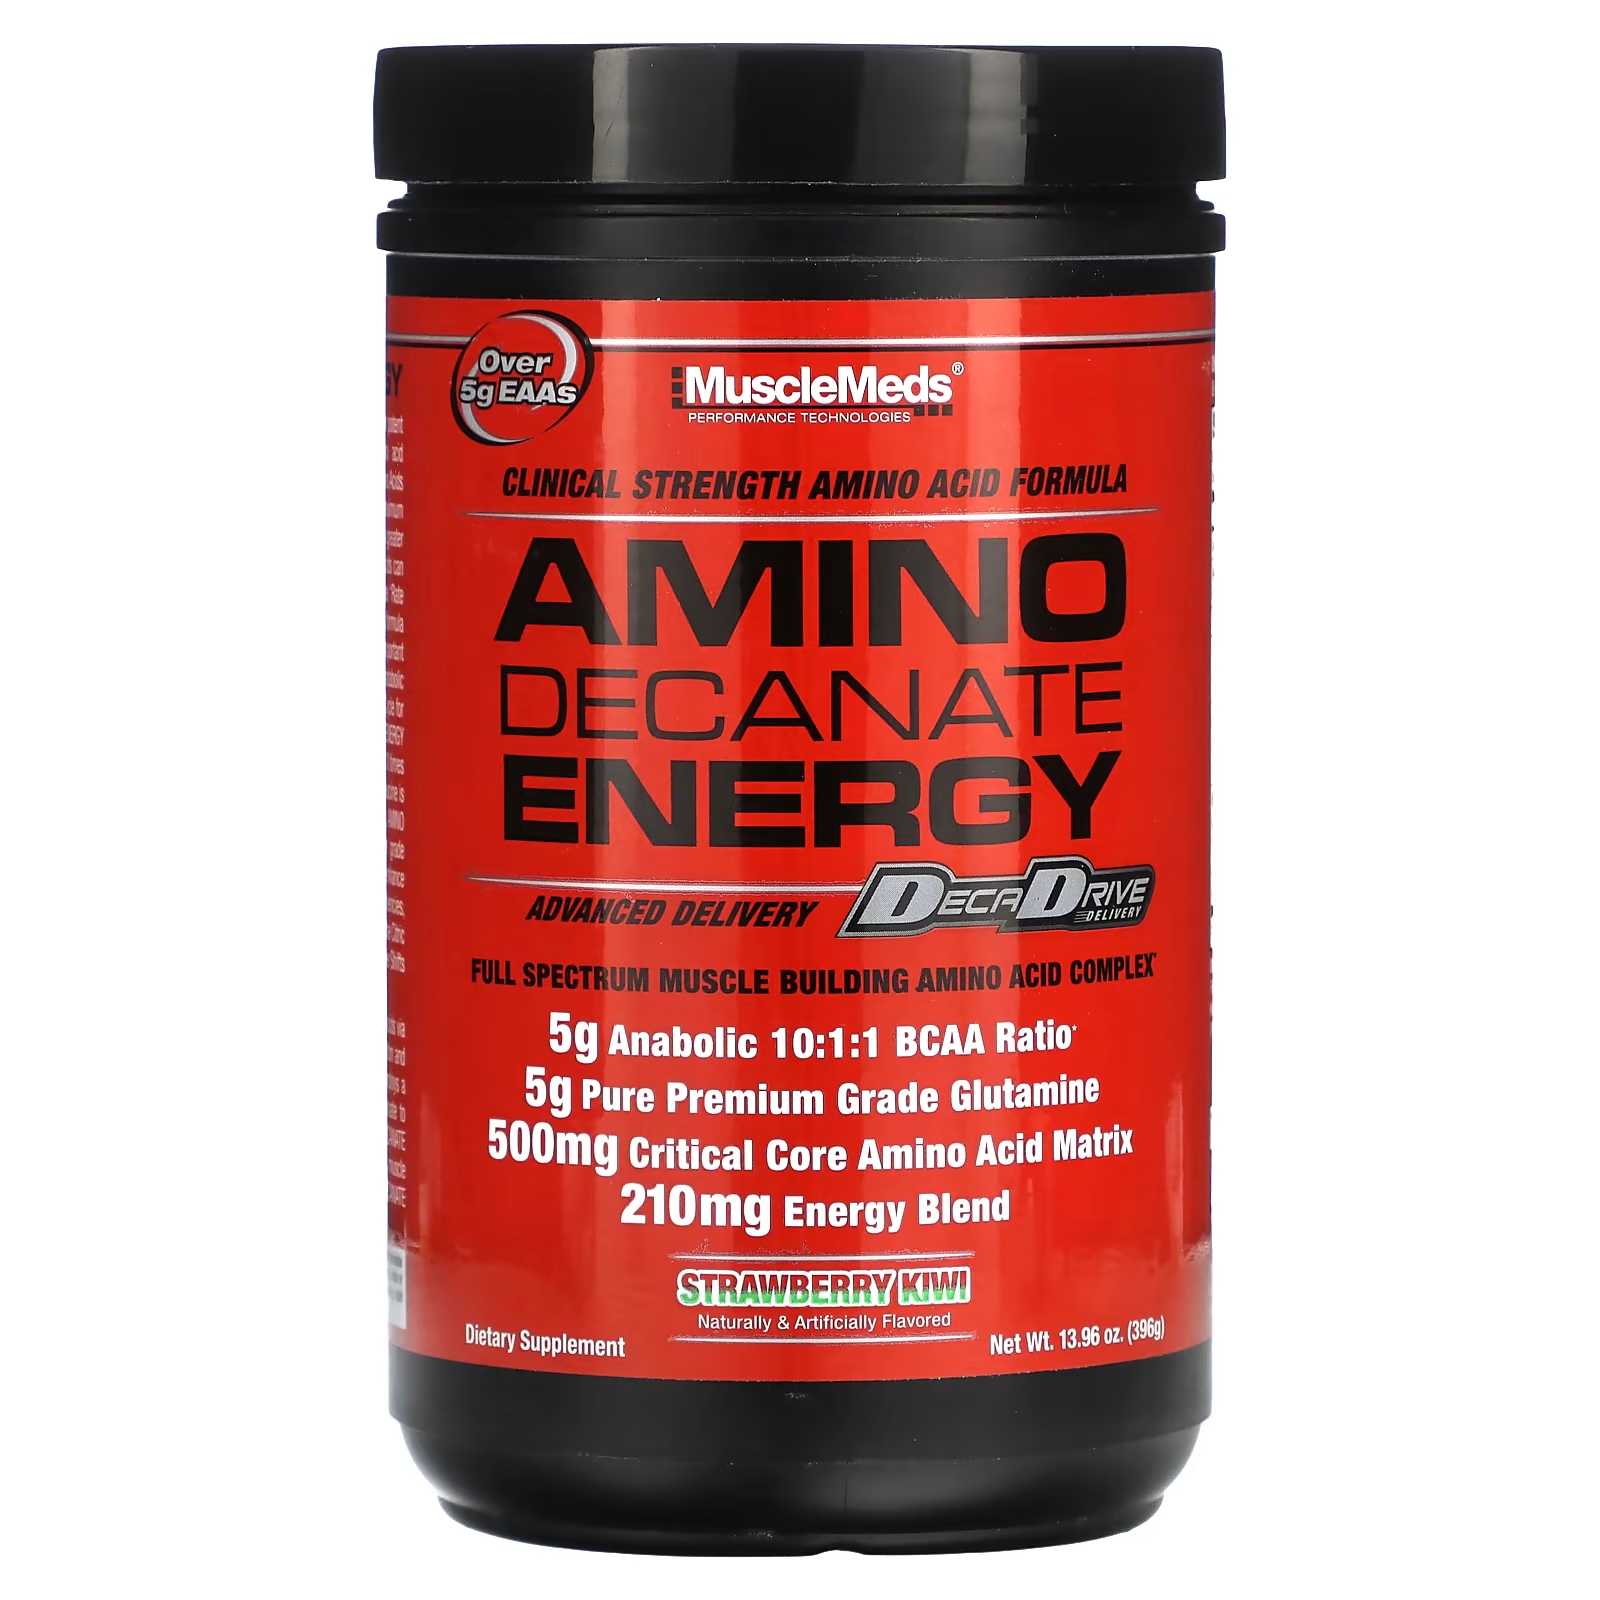 Пищевая добавка MuscleMeds Amino Decanate Energy, клубника и киви